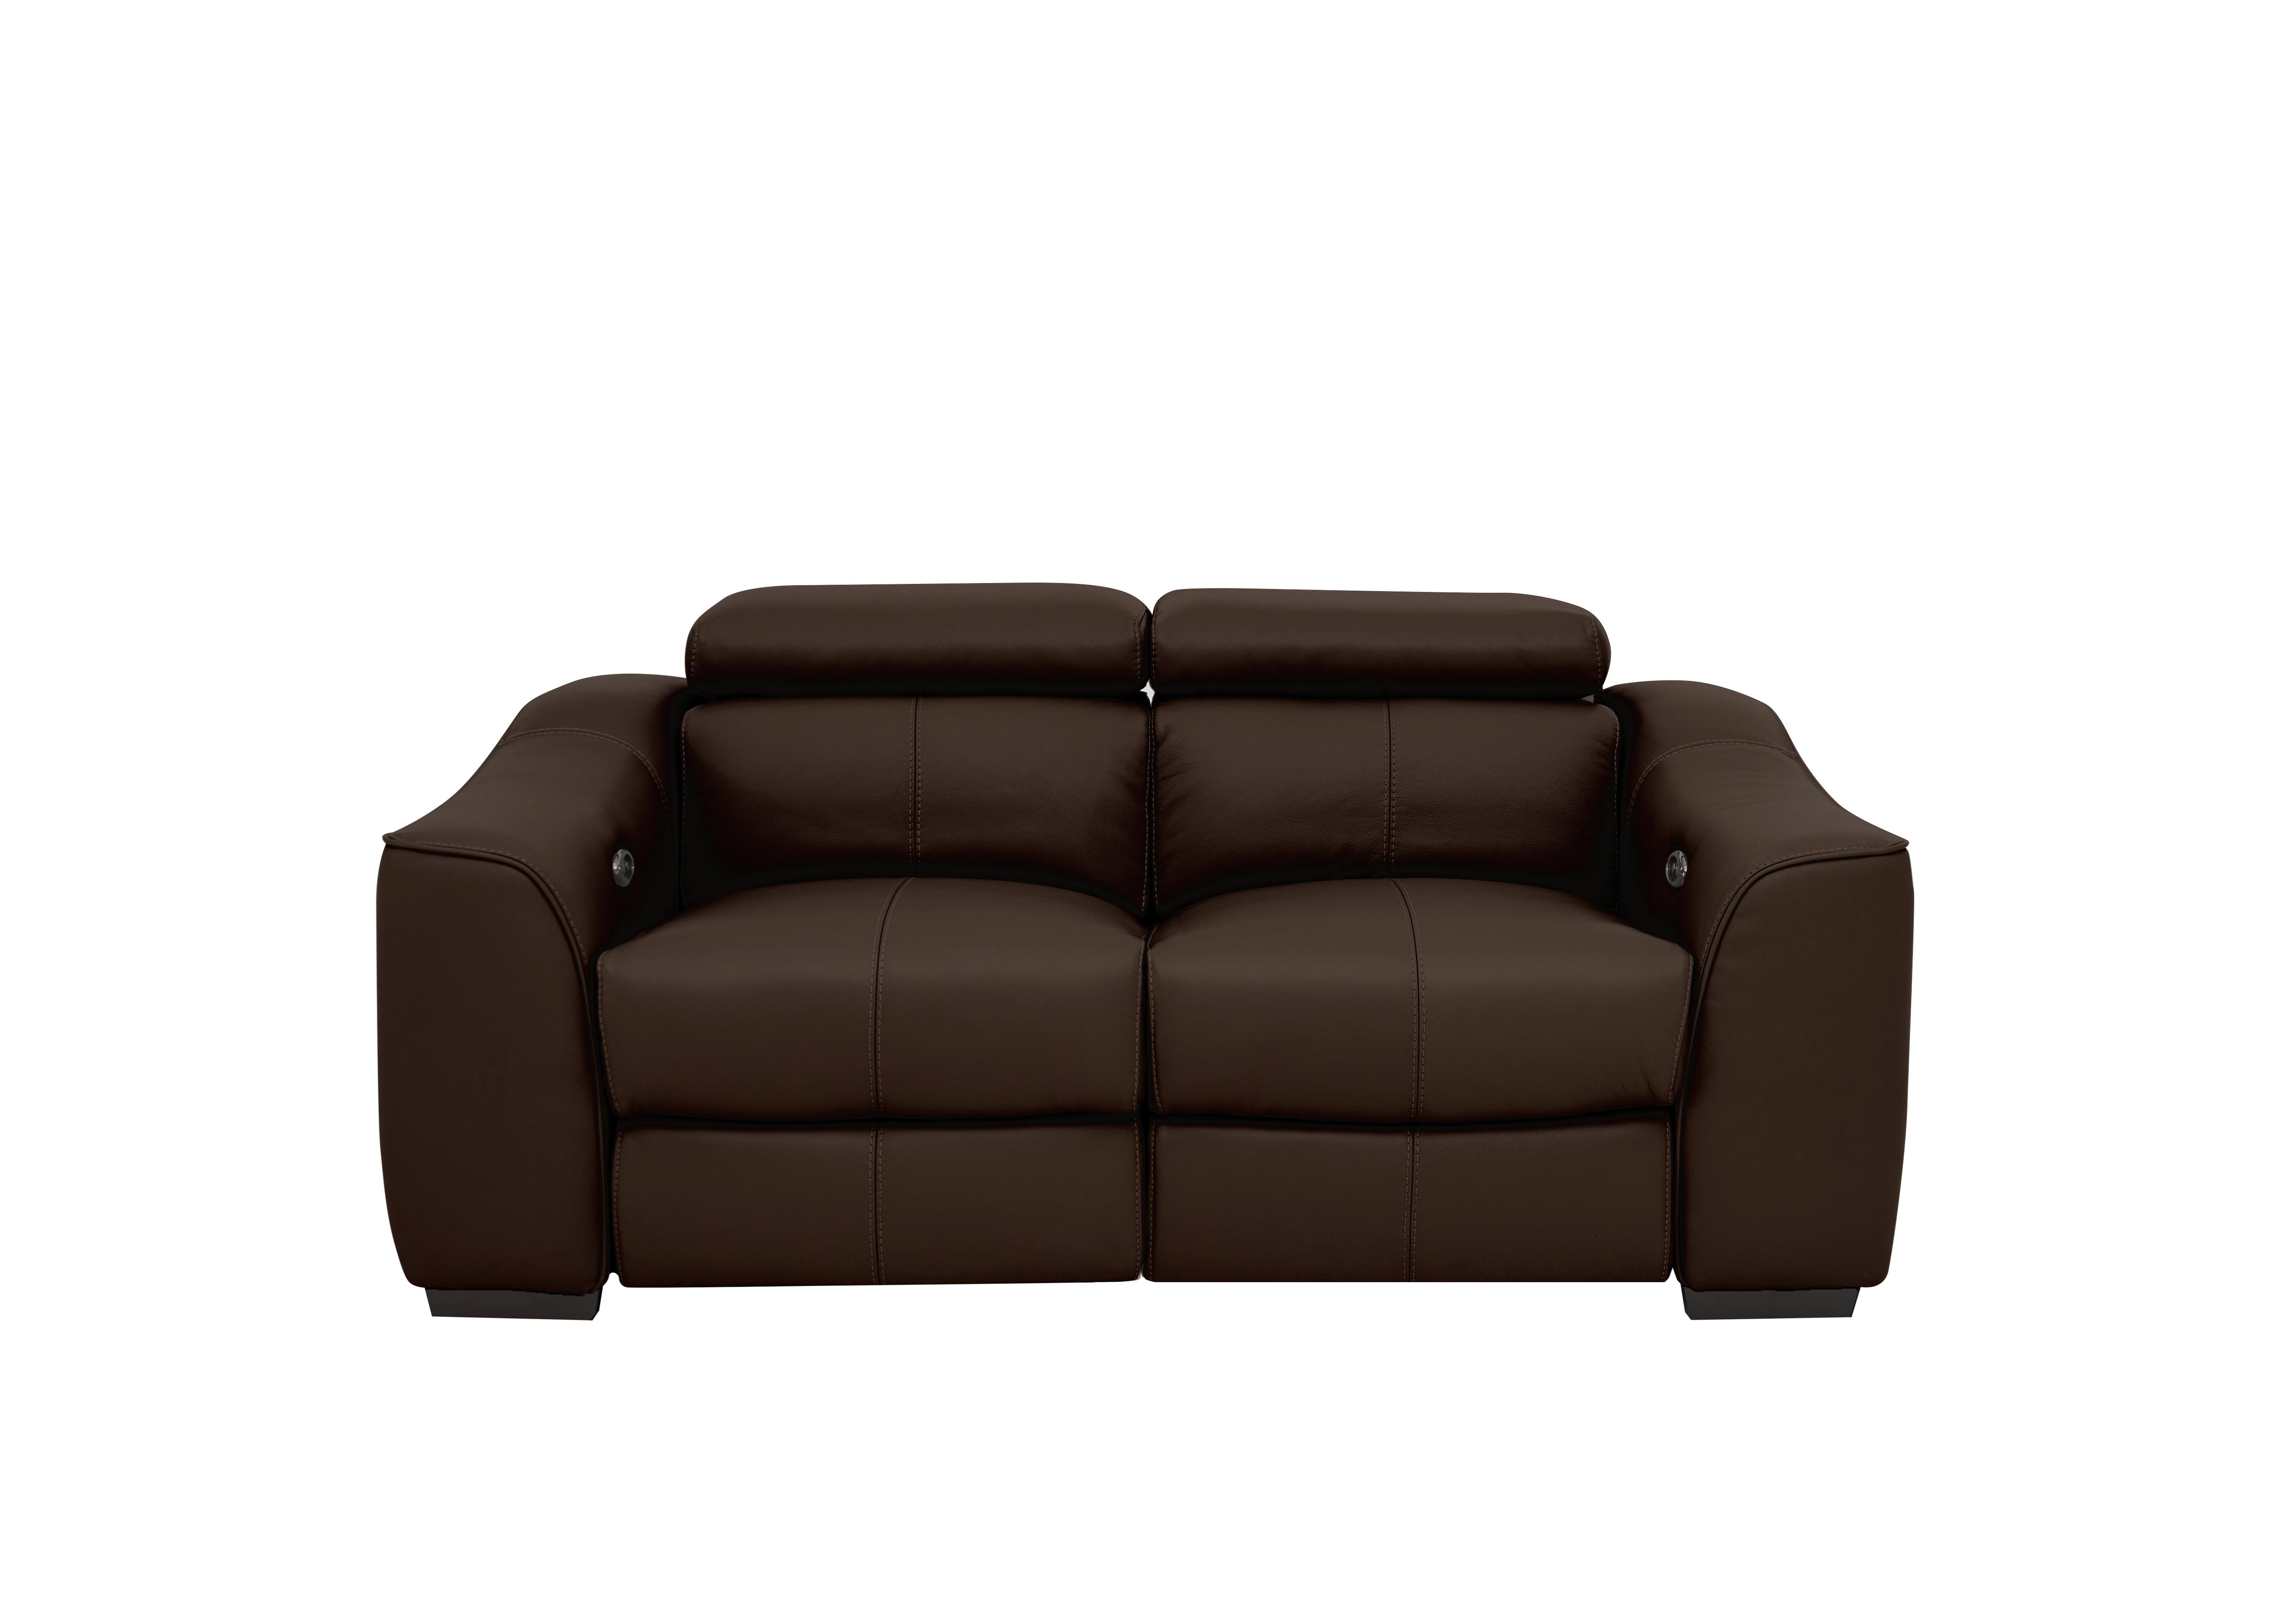 Elixir 2 Seater Leather Sofa in Bv-1748 Dark Chocolate on Furniture Village